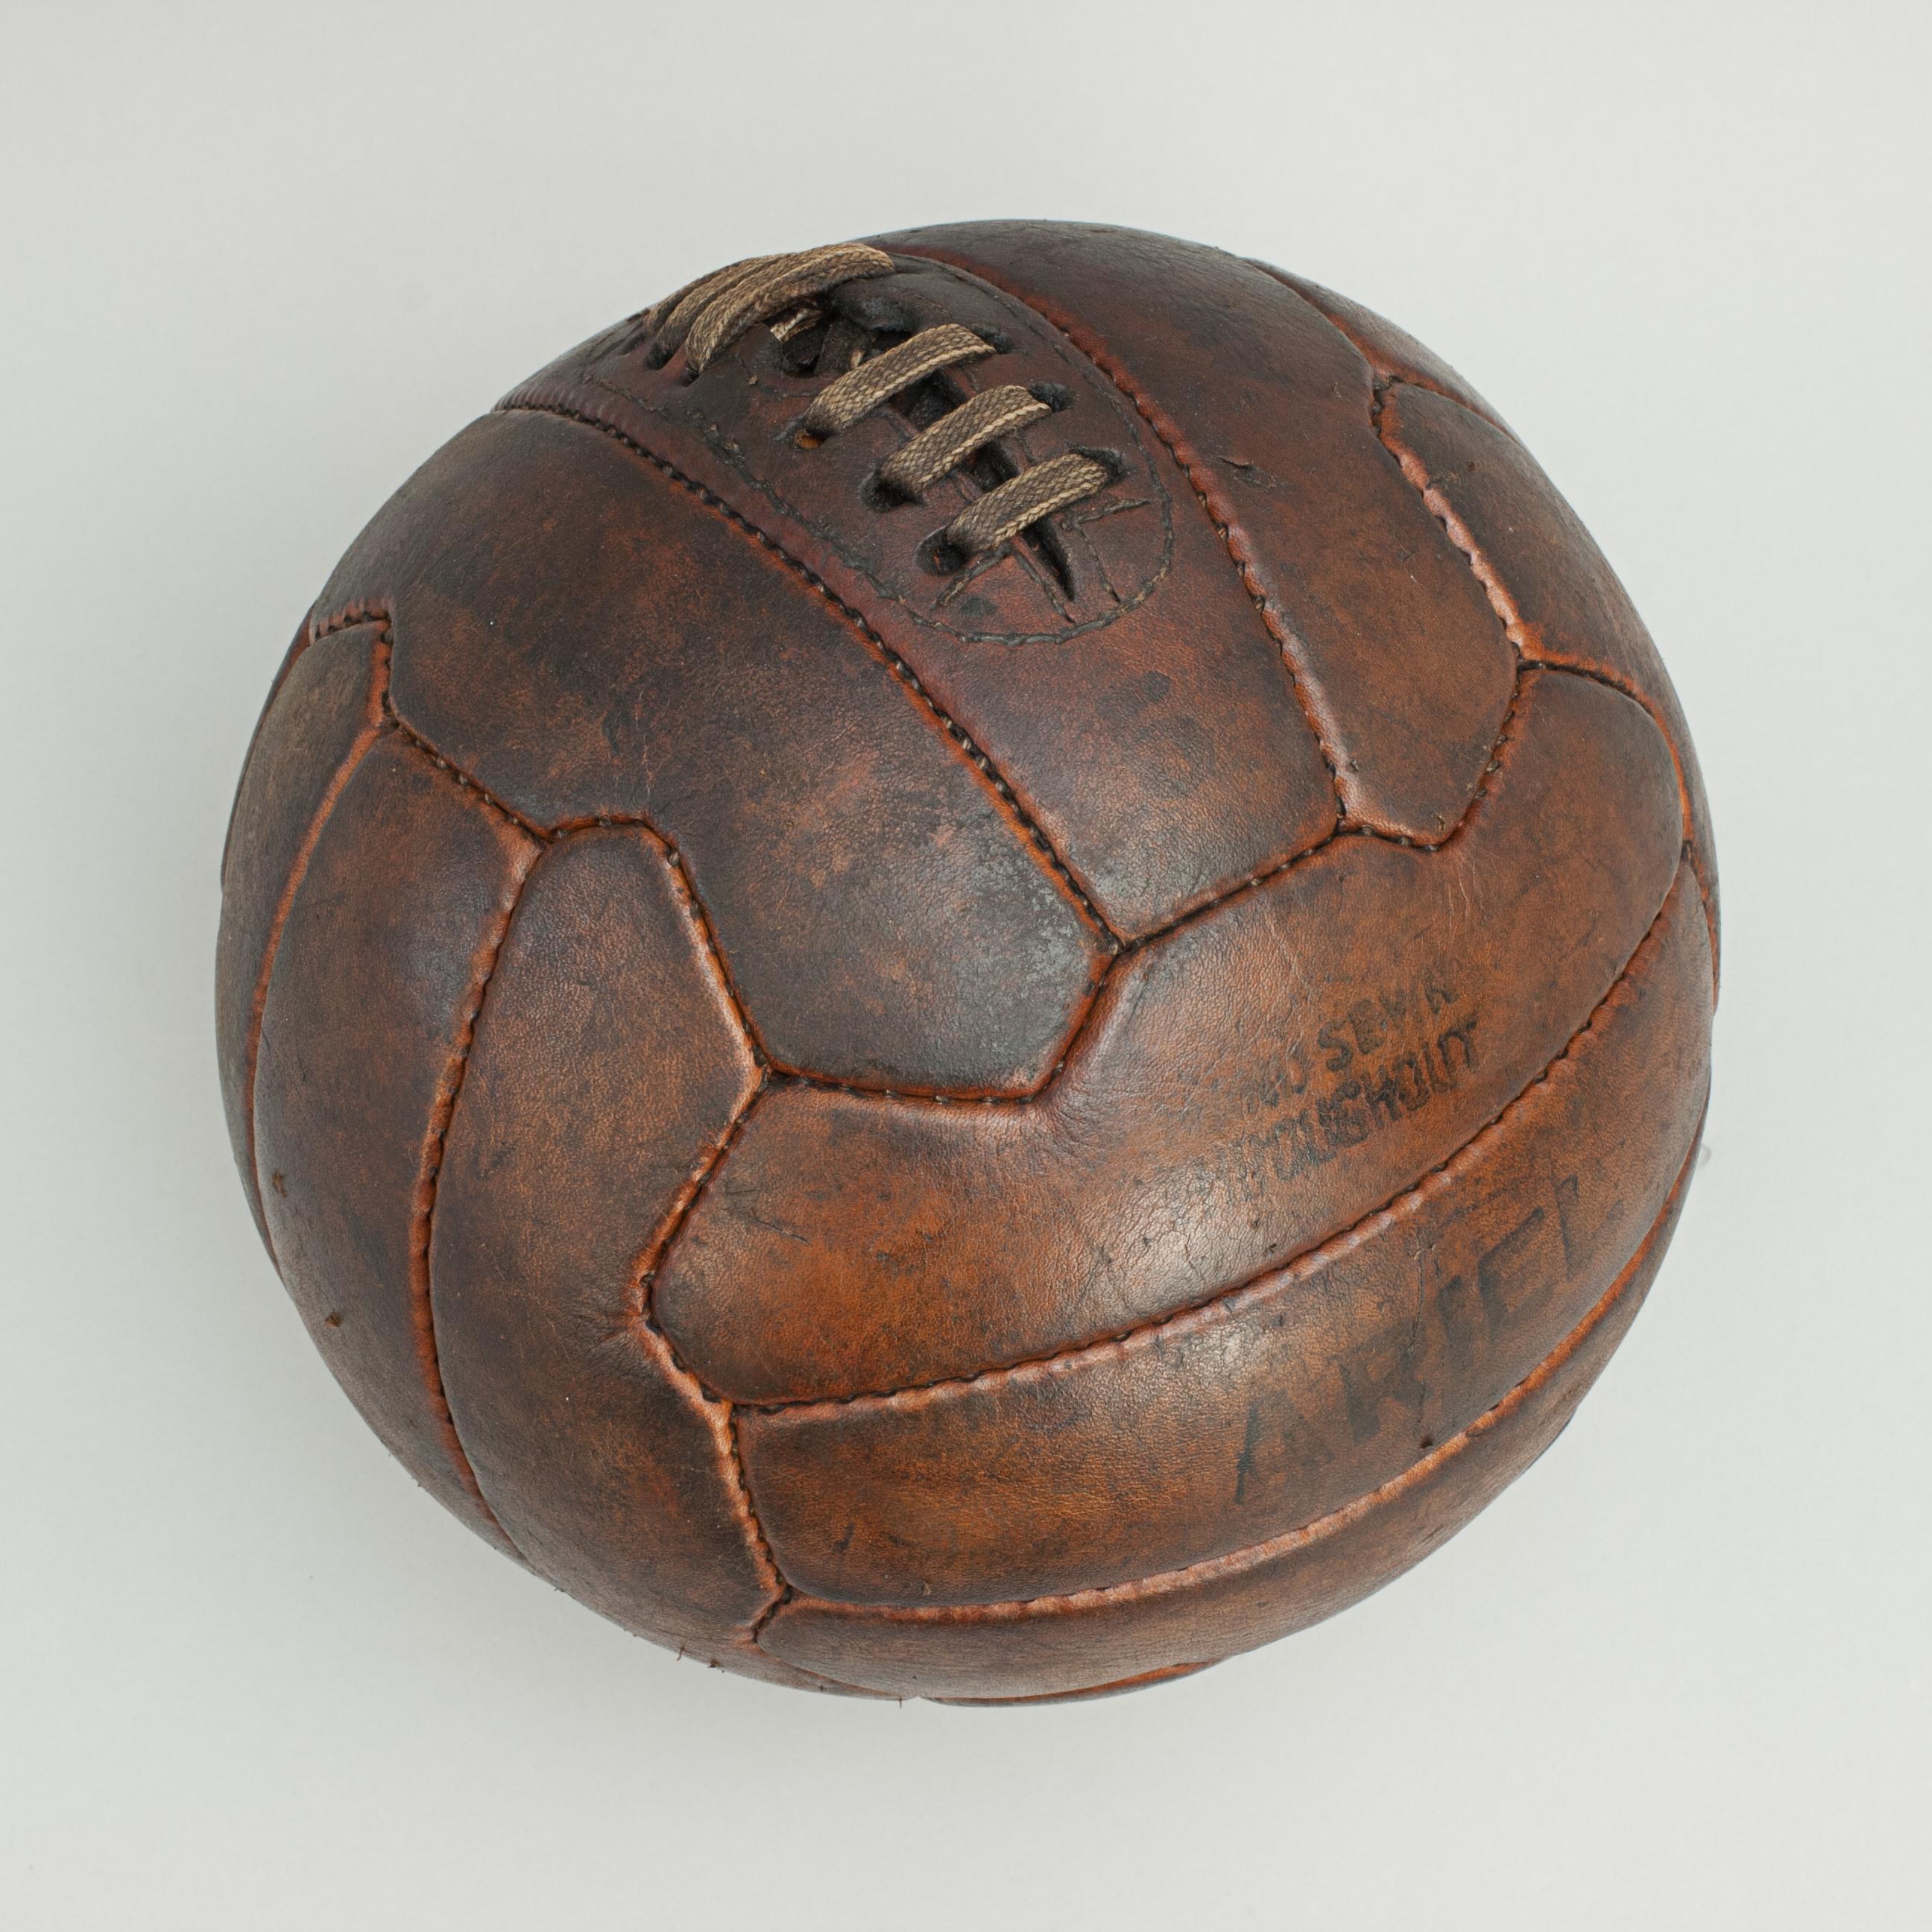 1950s Leather Vintage Football Zig-Zag Ariel Football Soccer Ball 1